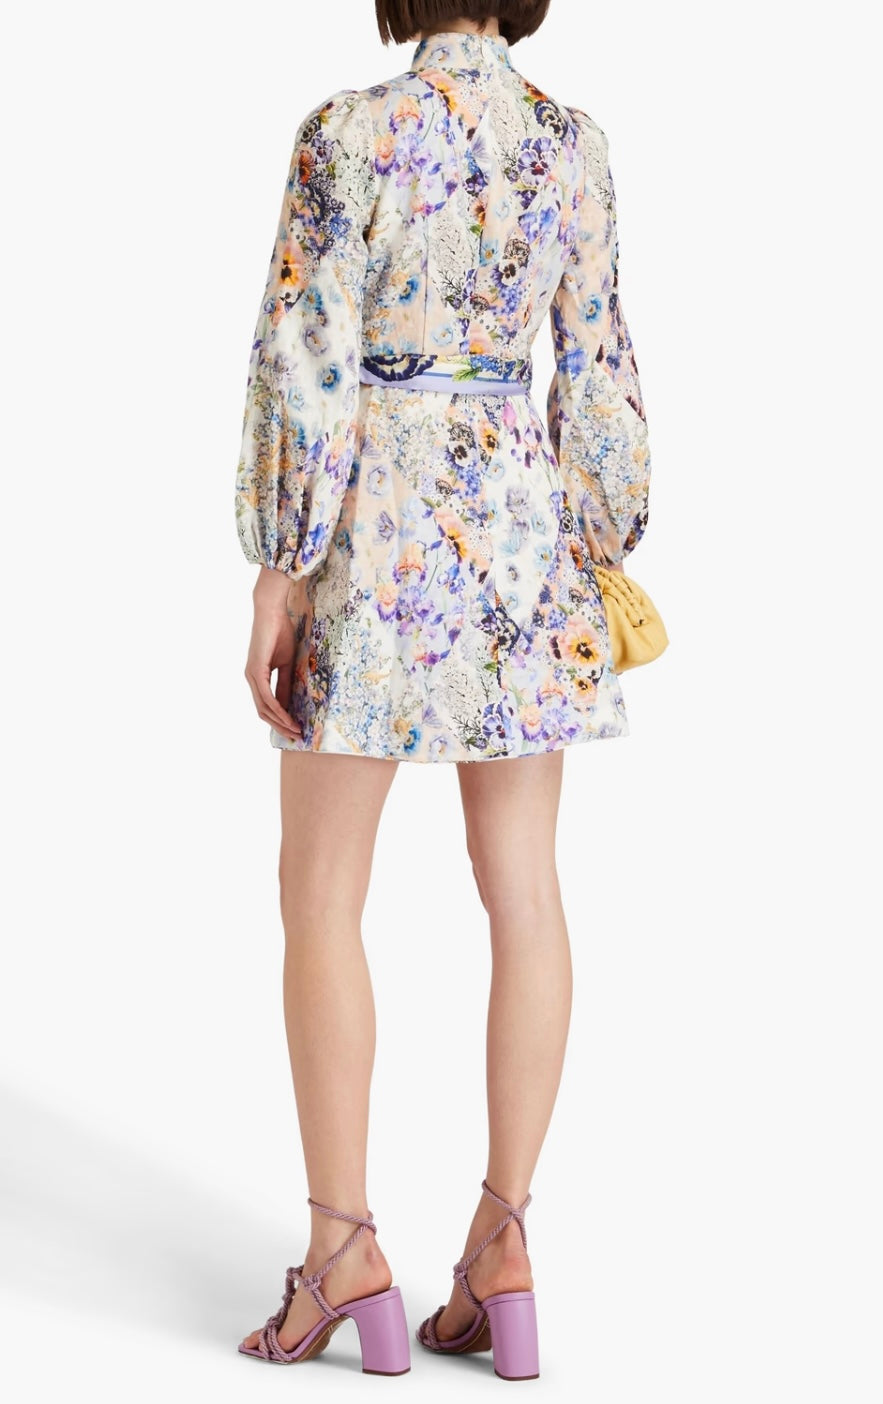 ZIMMERMANN
Floral-print linen mini dress